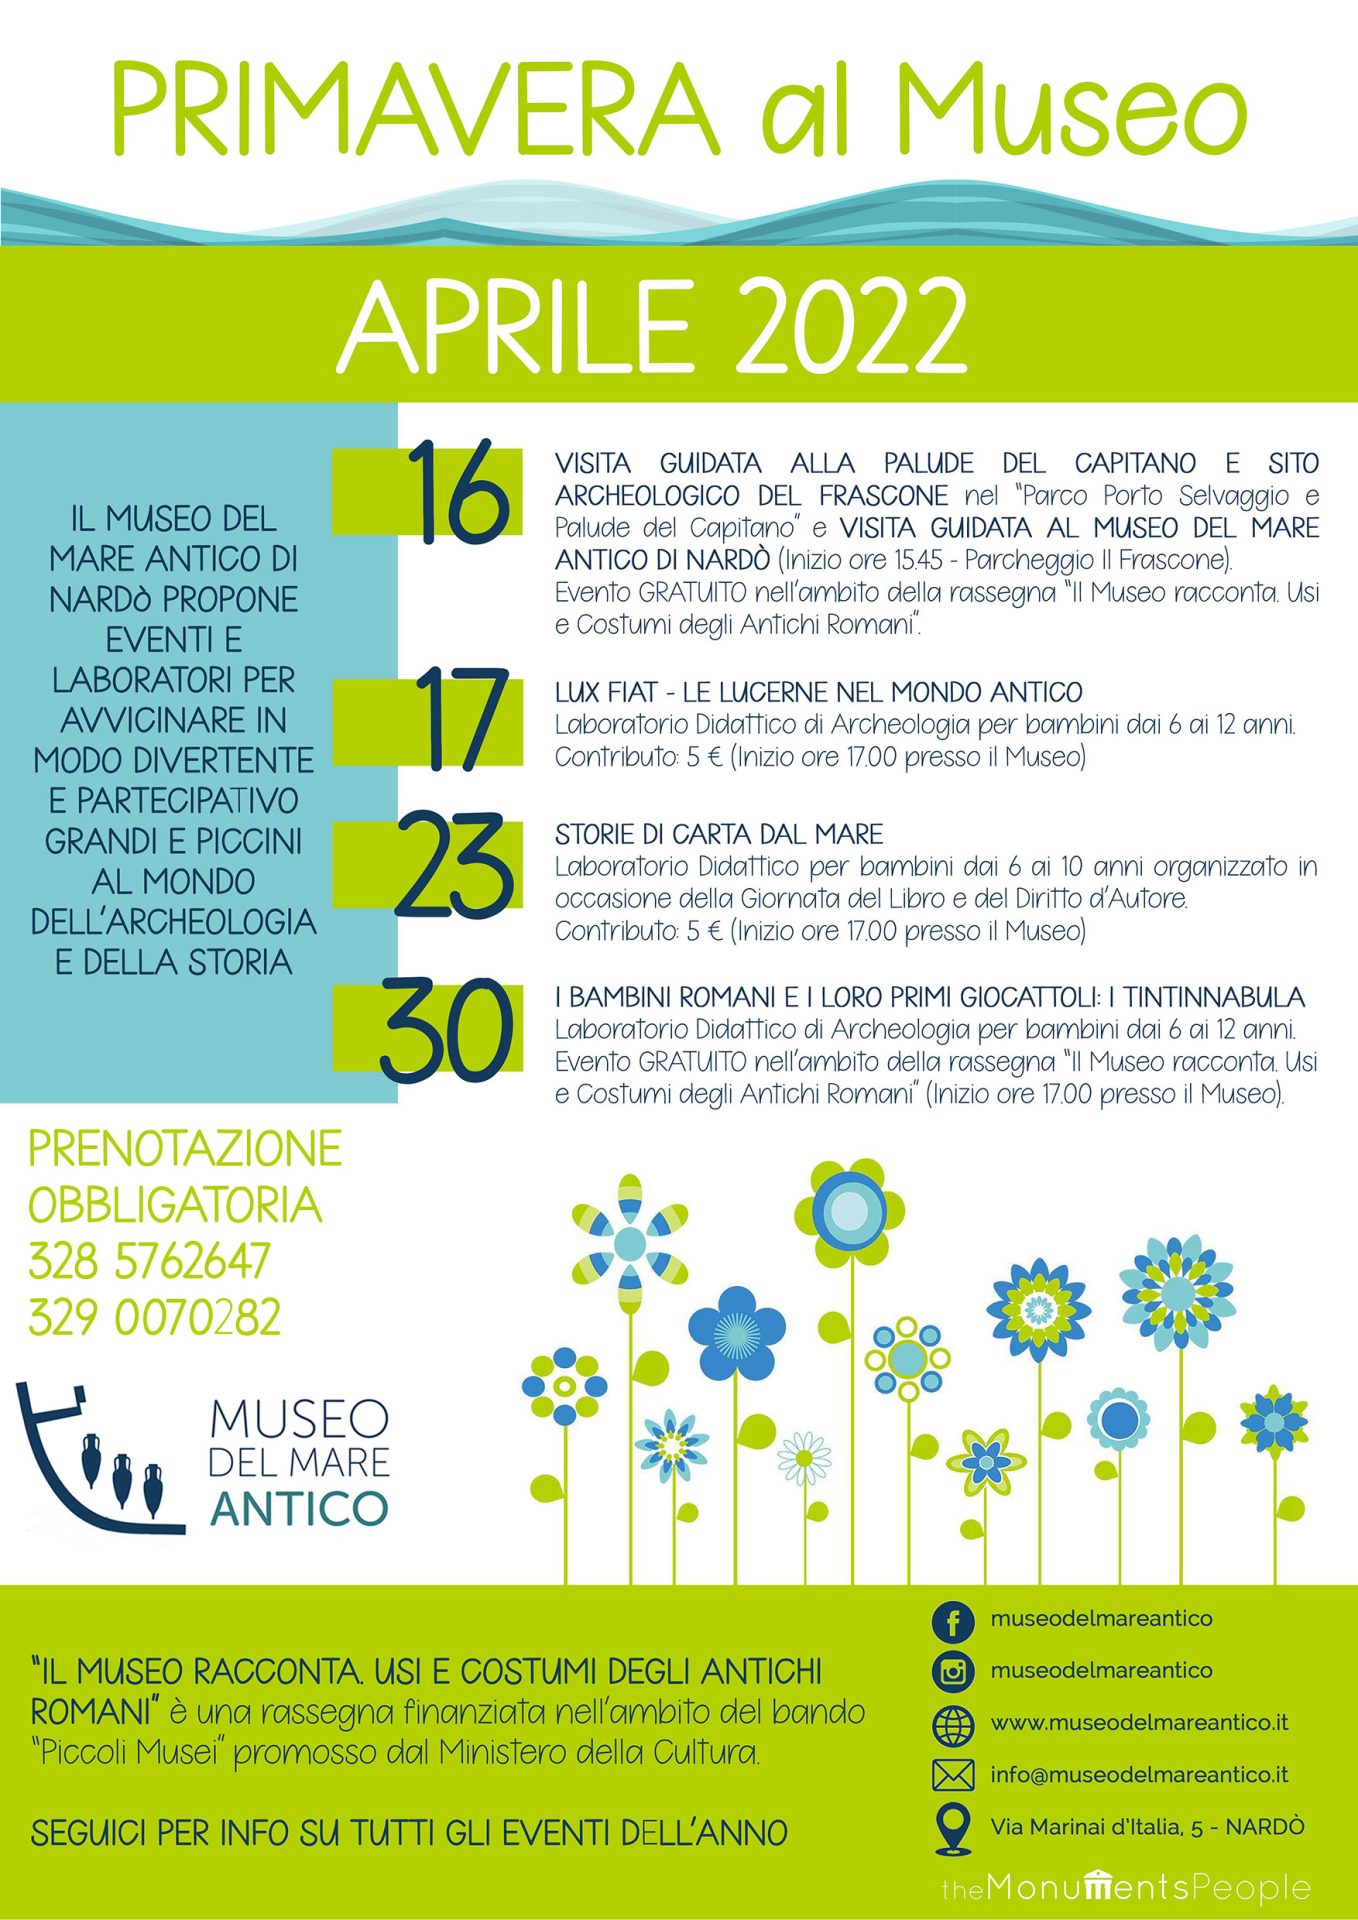 Primavera al Museo – Aprile 2022